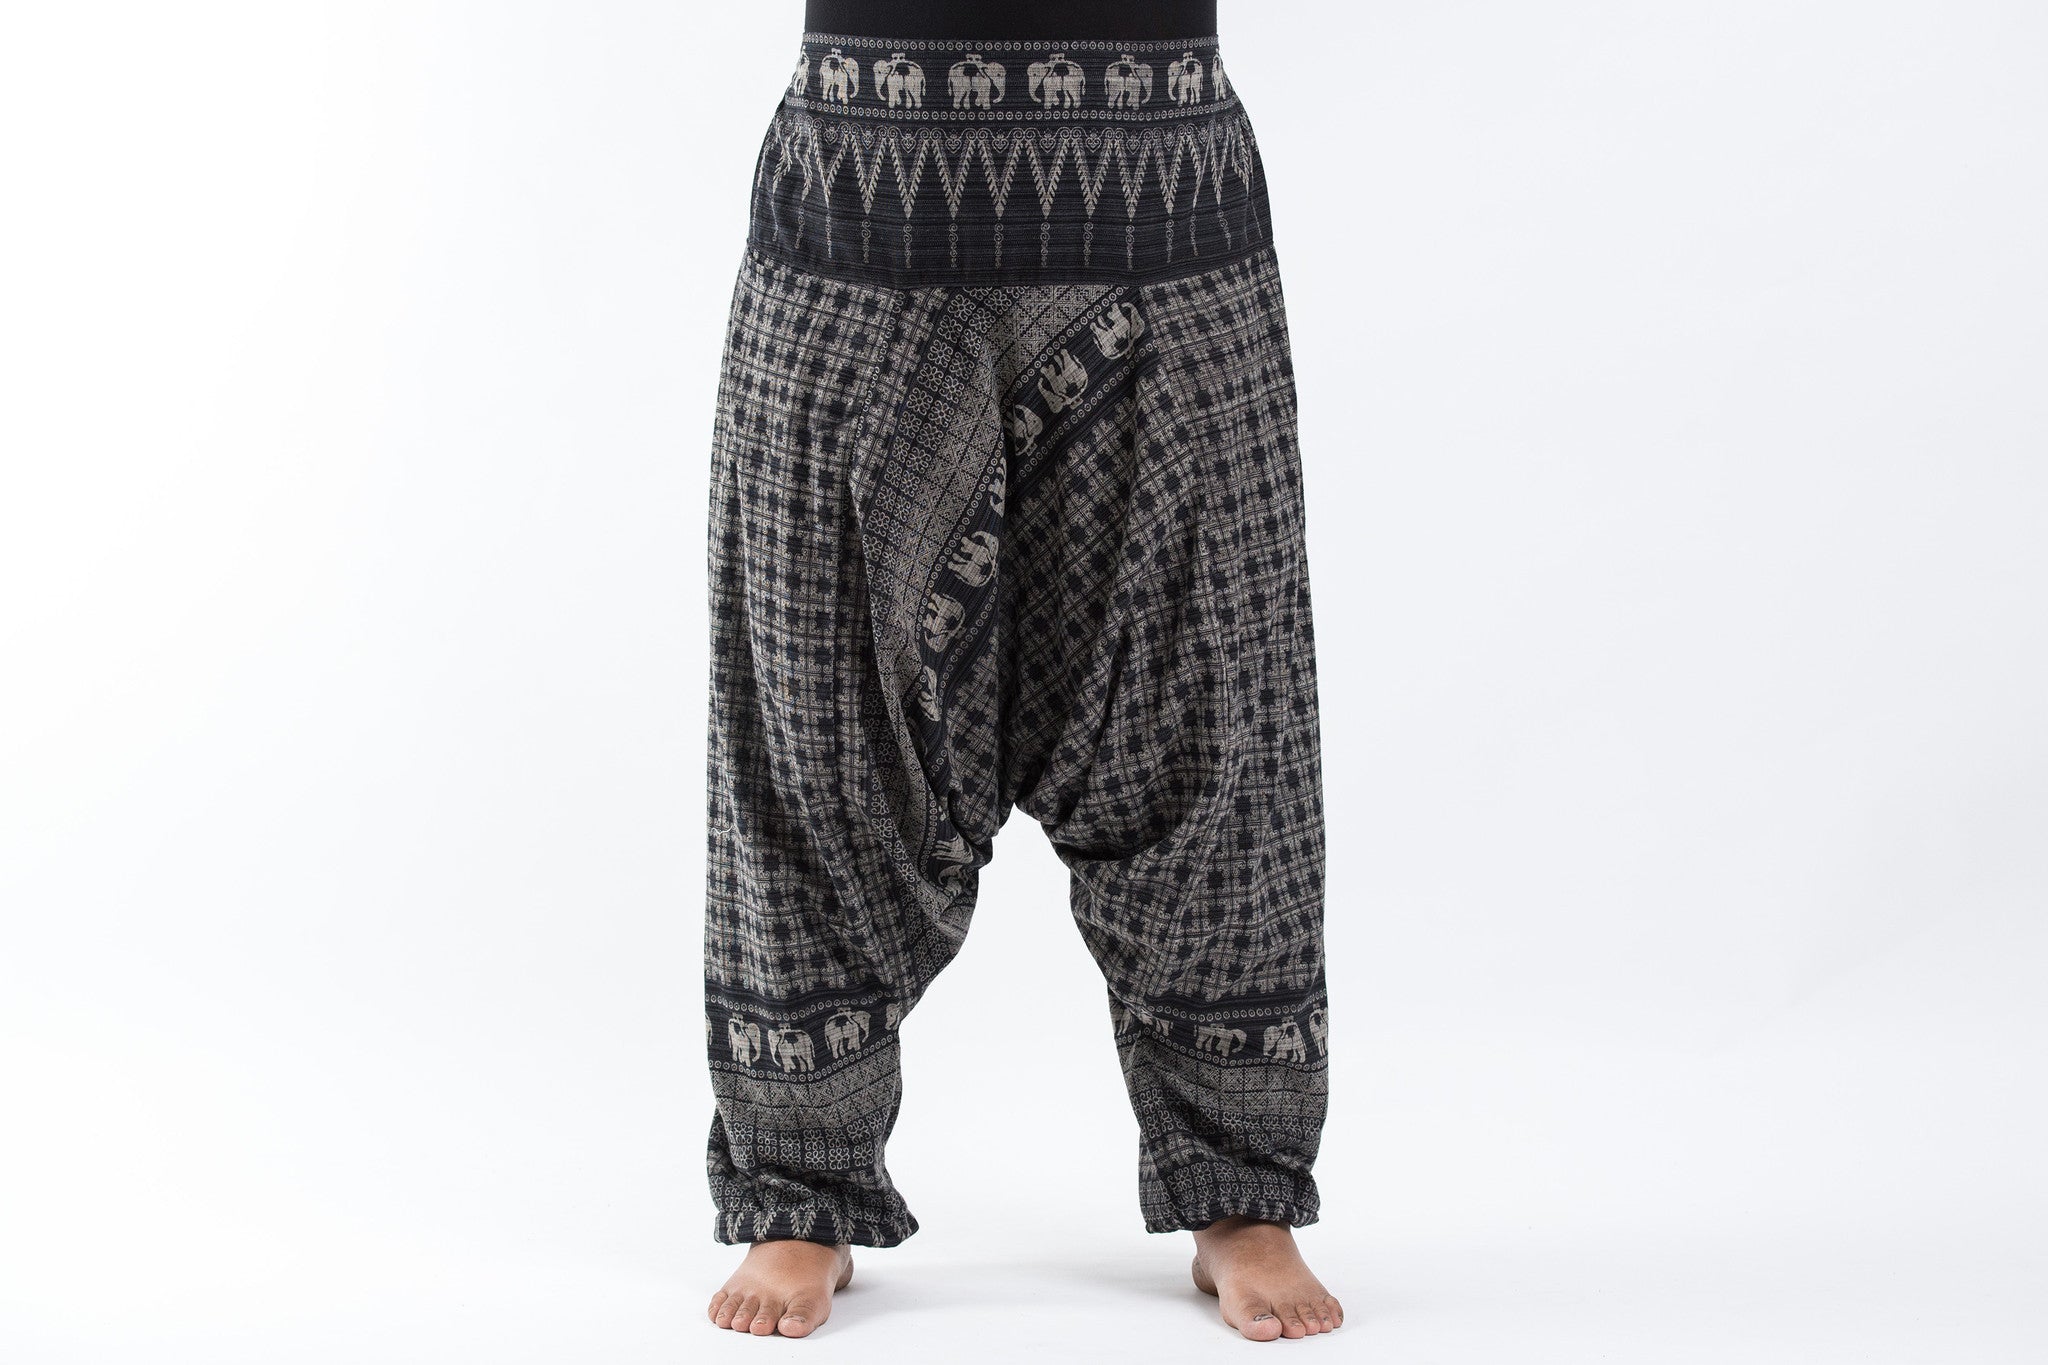 Plus Size Hill Tribe Elephant Women's Elephant Pants in Black – Harem Pants